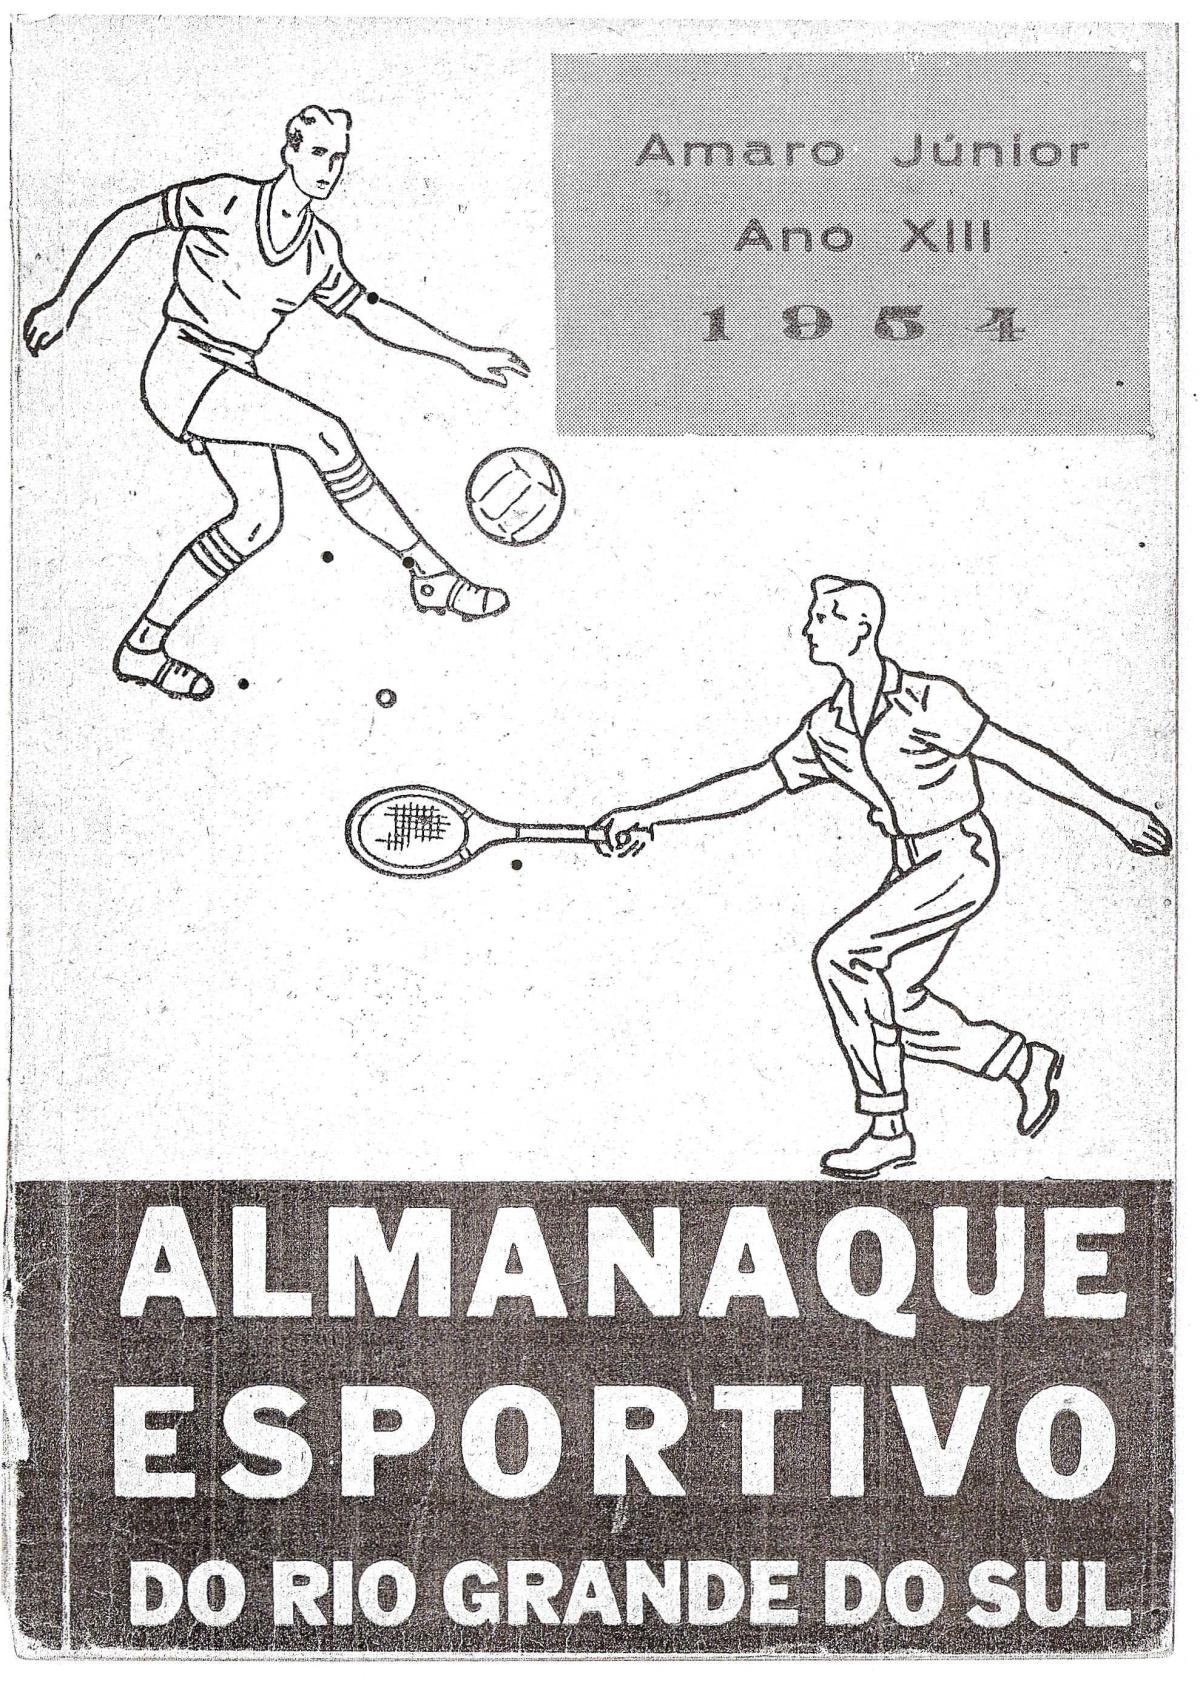 Almanaque Esportivo do Rio Grande do Sul – Amaro Júnior 1954